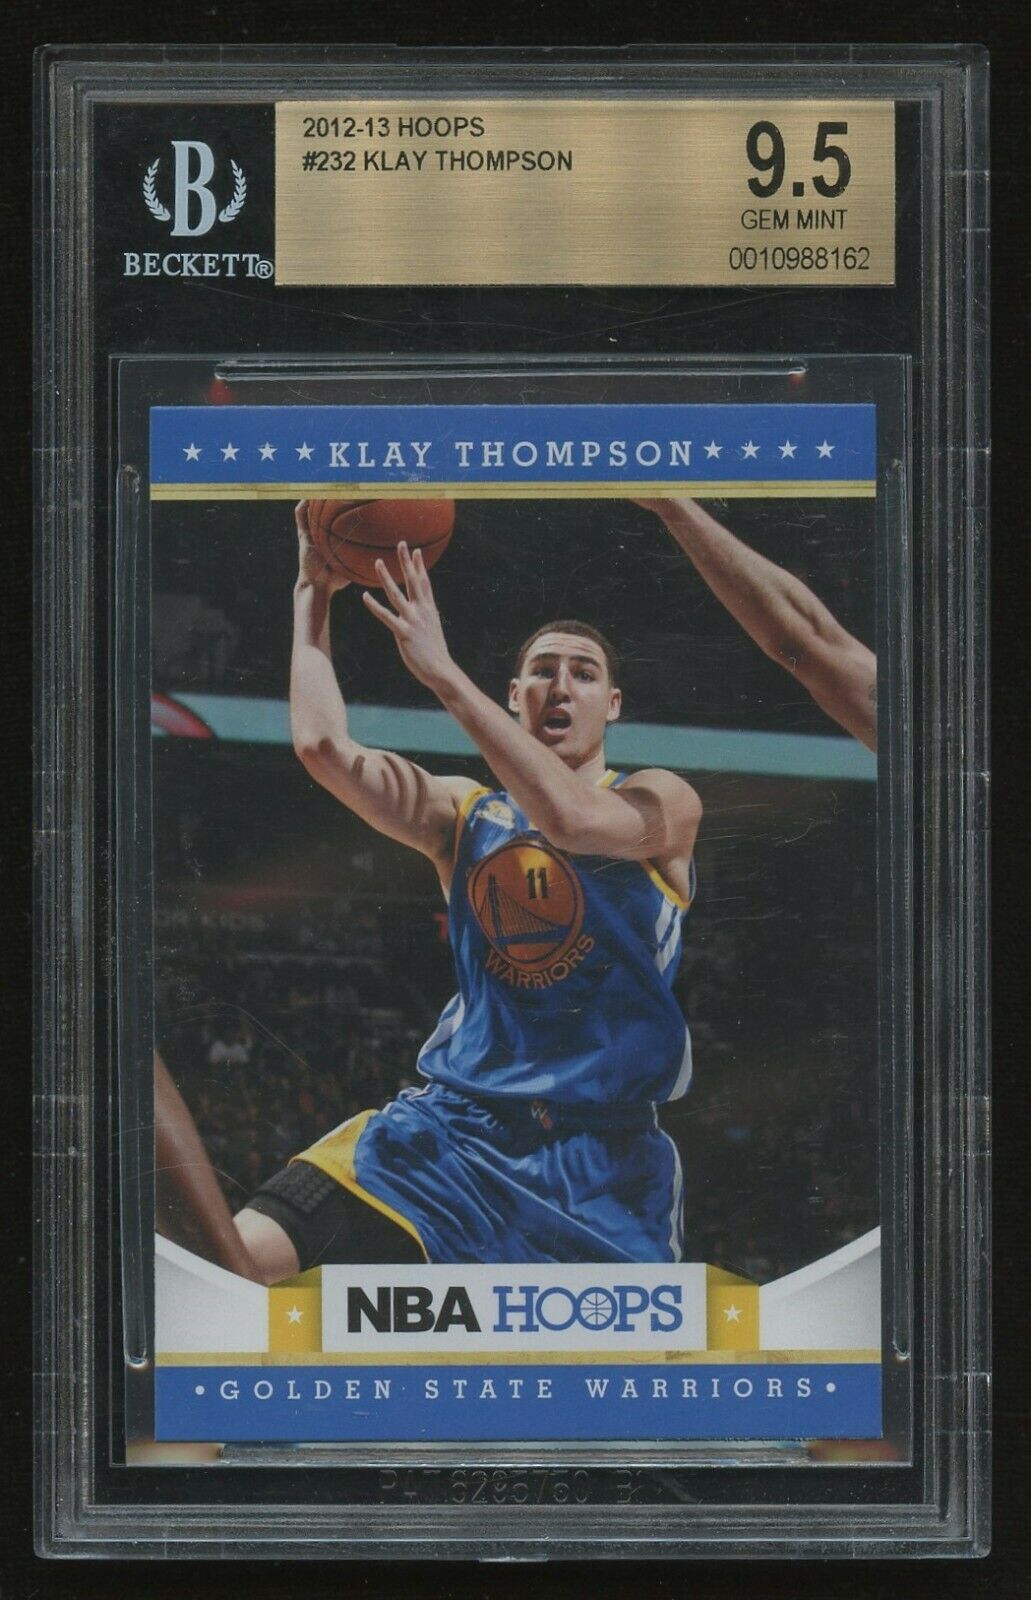 2012-13 NBA Hoops Klay Thompson # 232 Rookie Card RC BGS 9.5